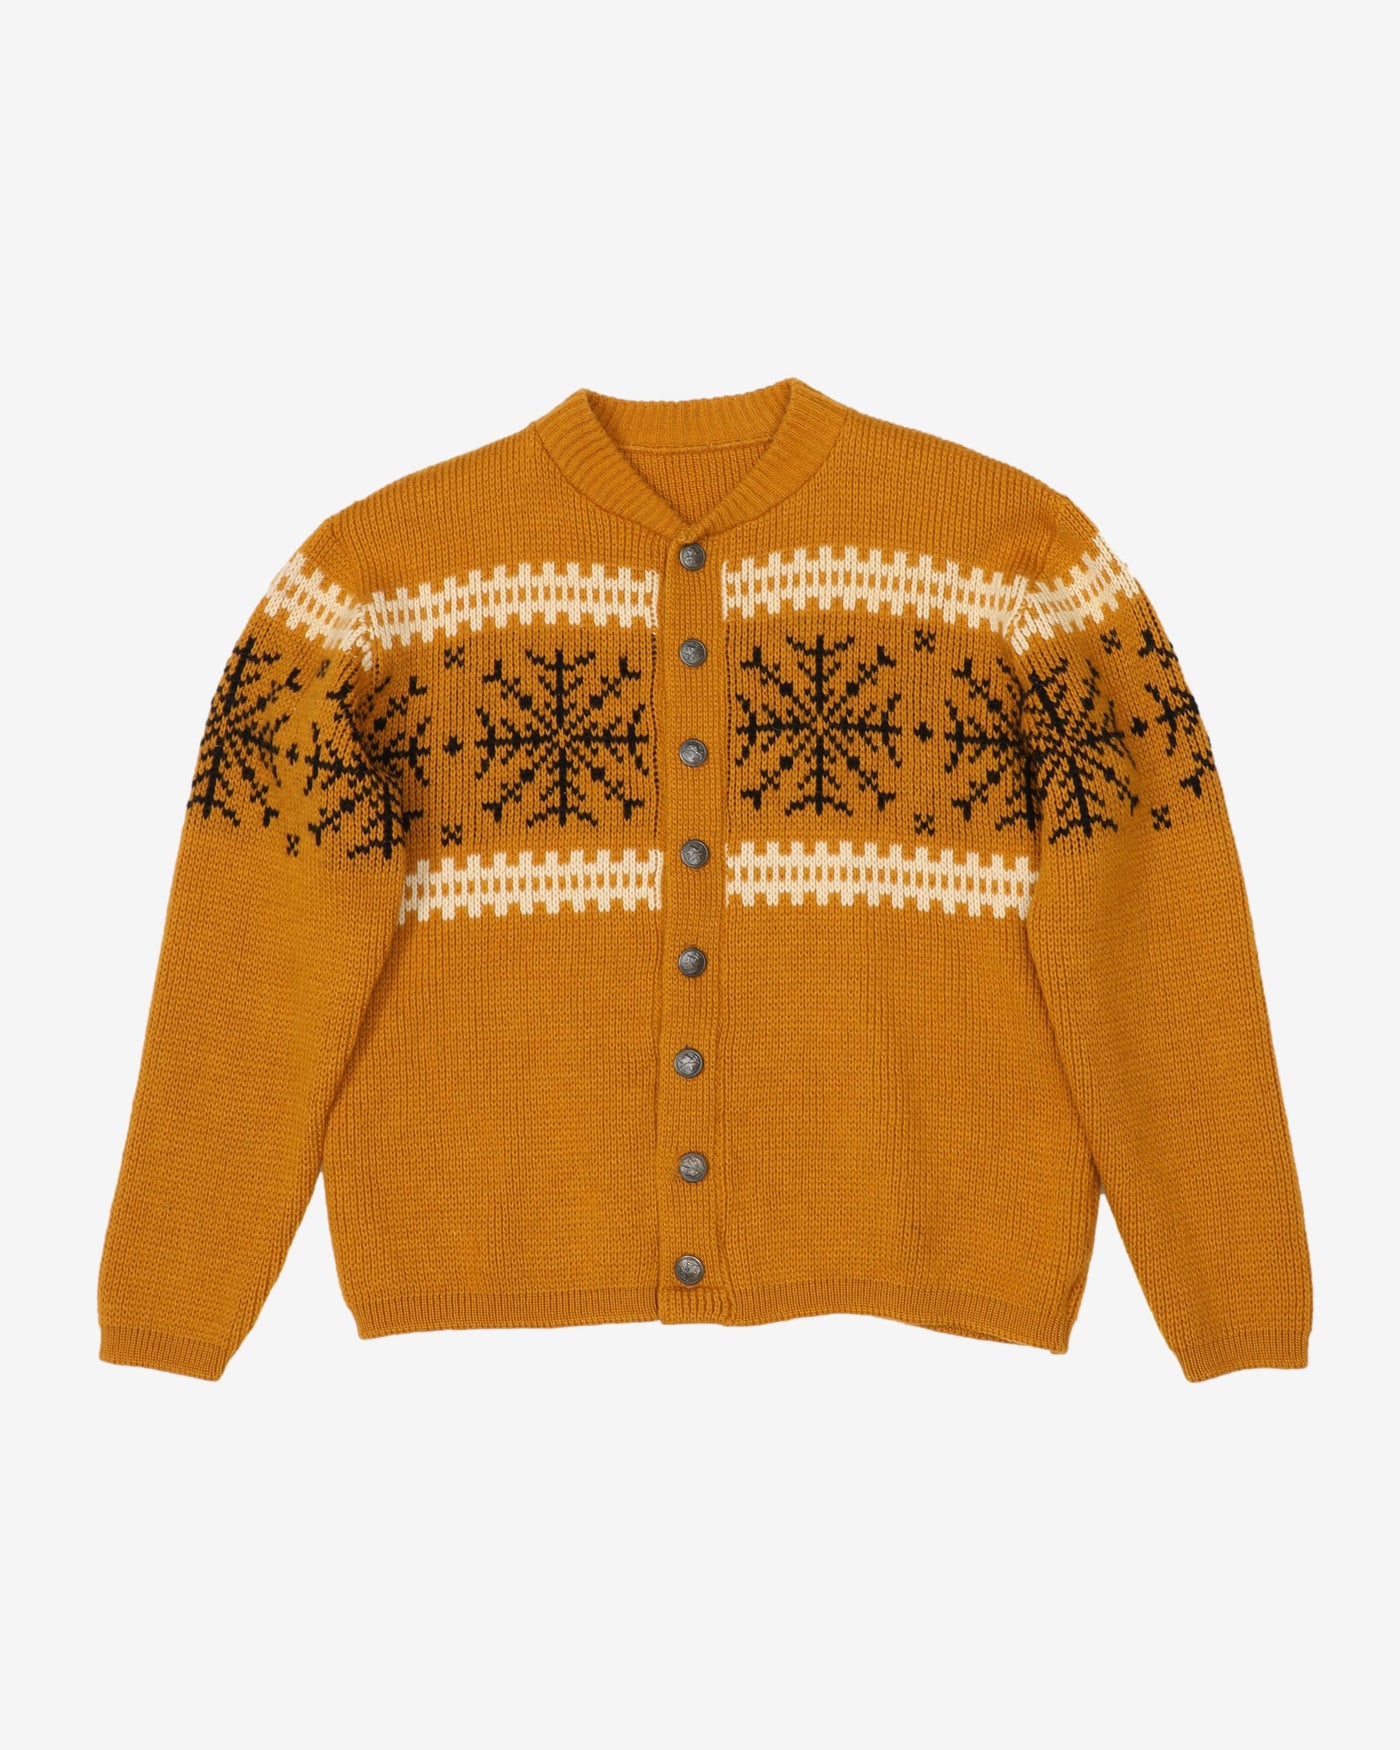 Vintage 80s Mustard Yellow Button Up Knitted Sweatshirt - M